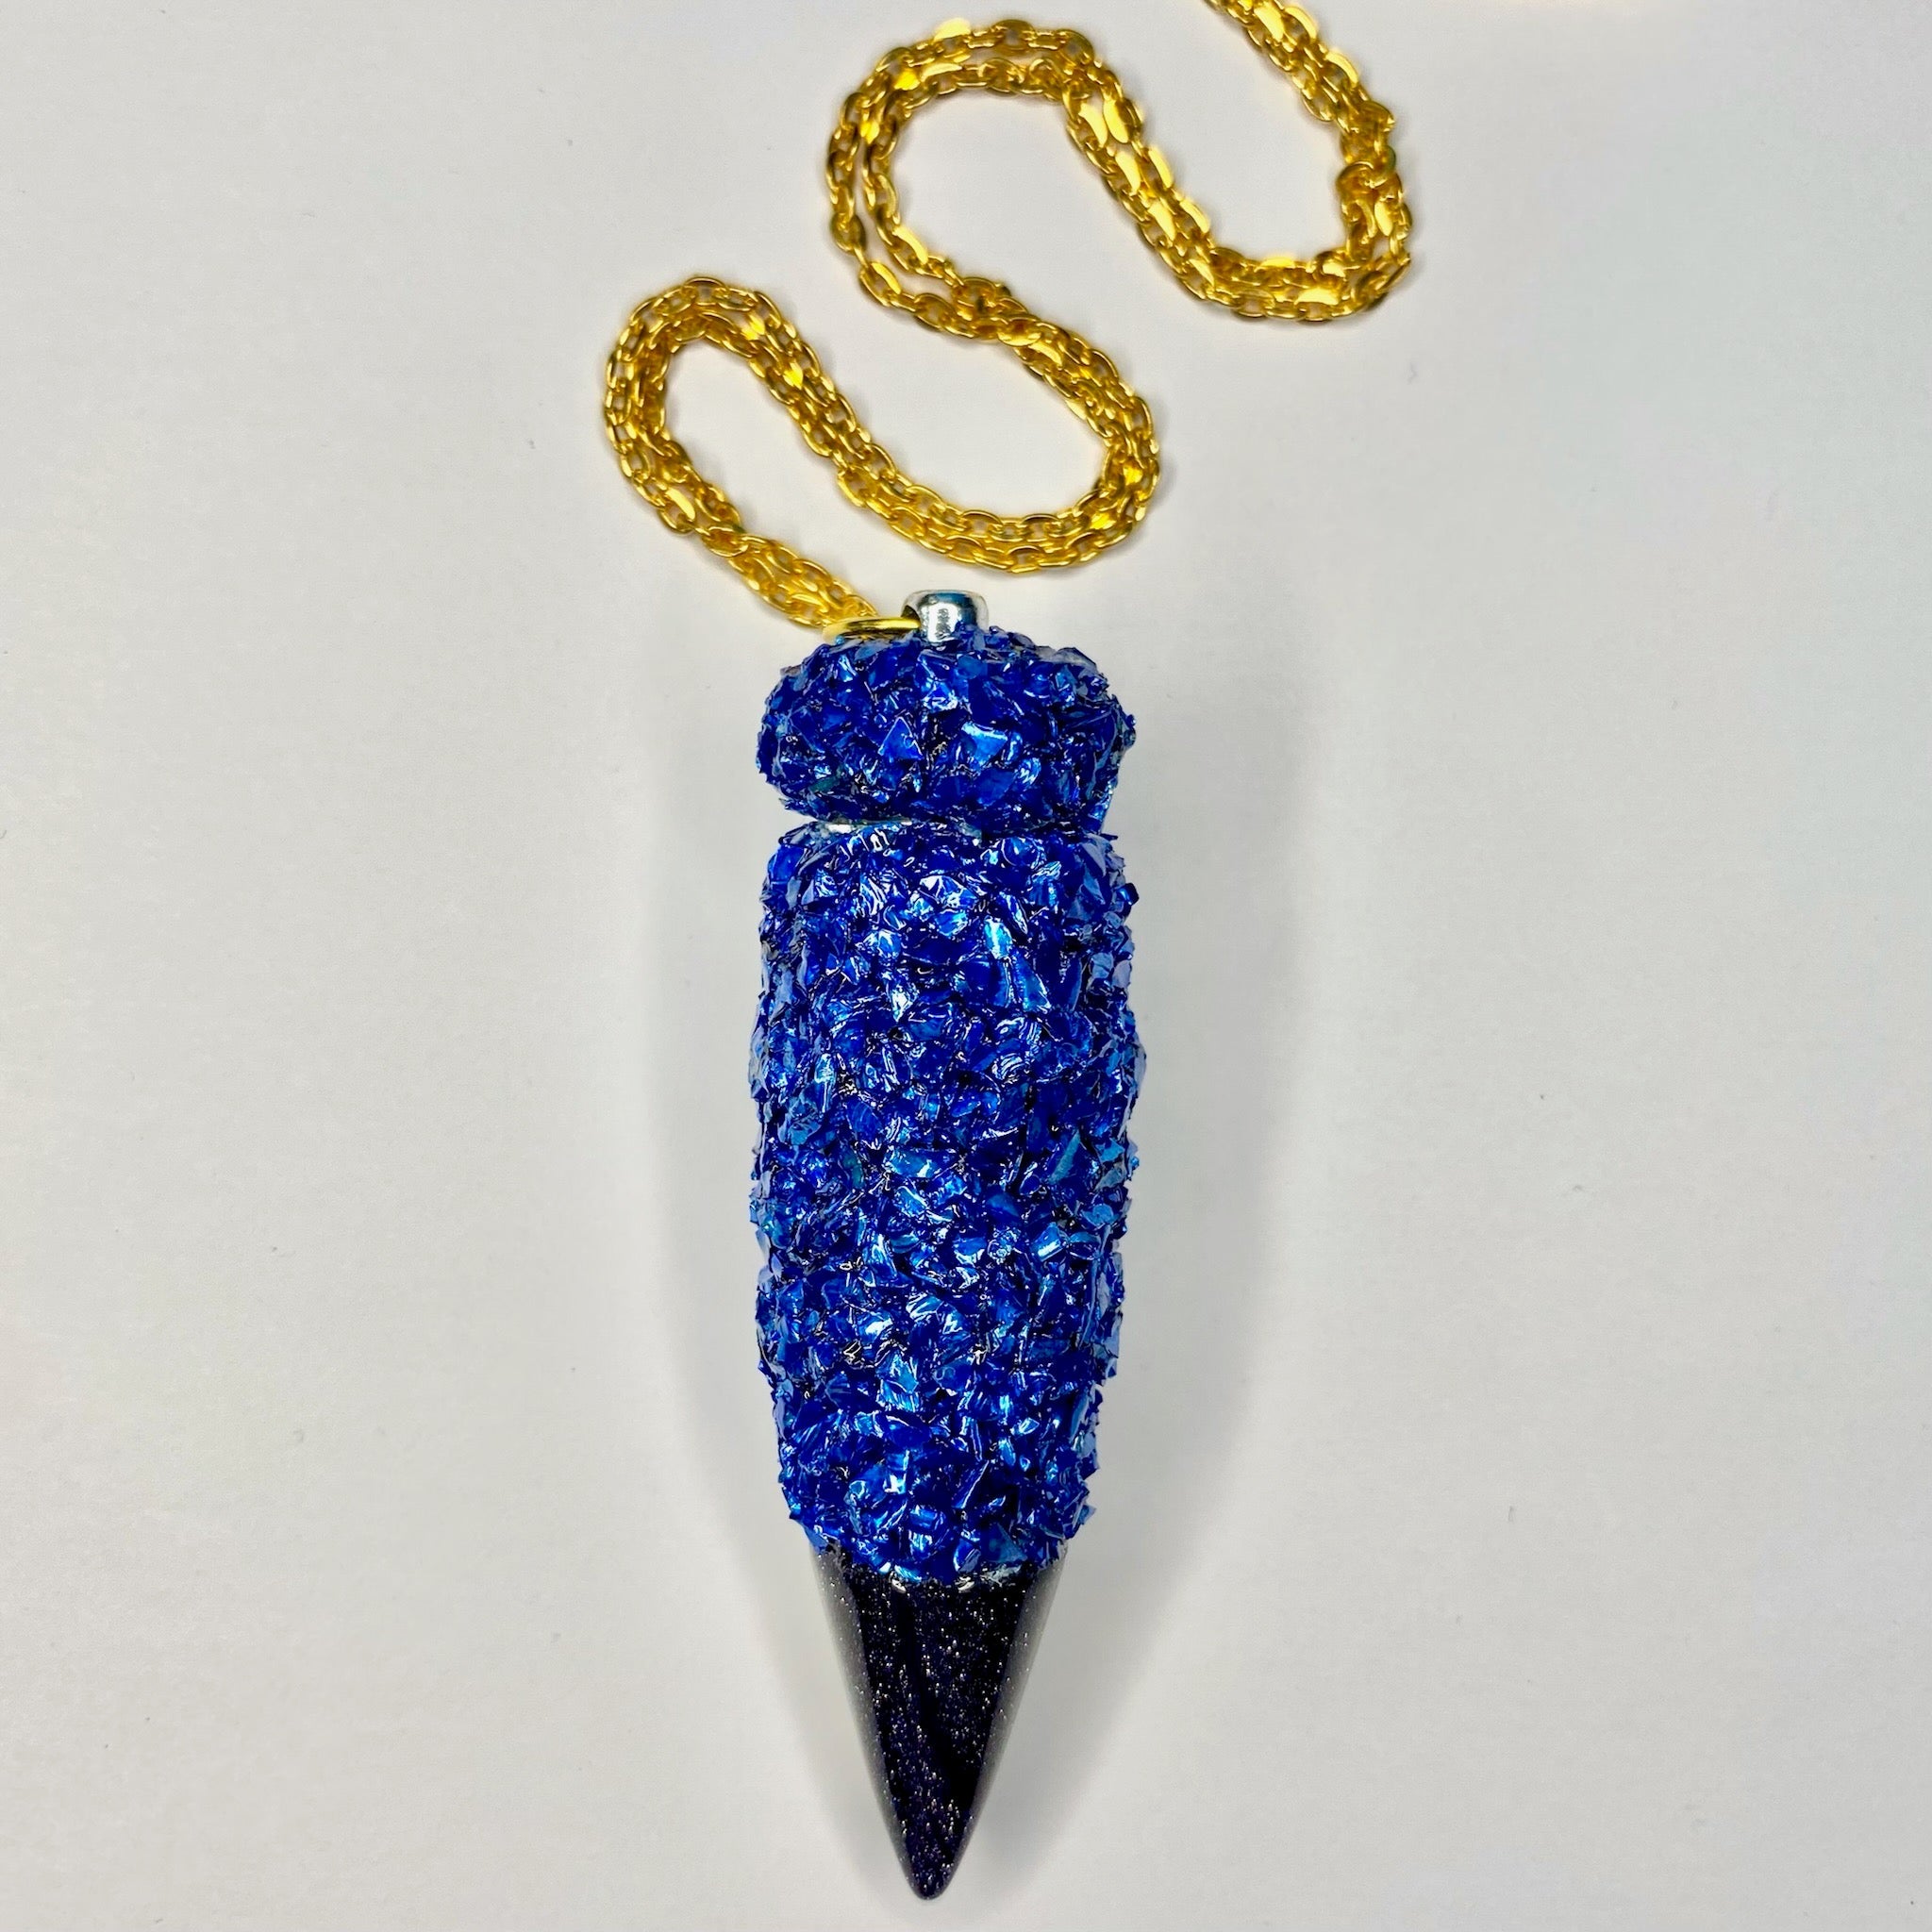 Stash Necklace With Telescopic Spoon – Rave Fashion Goddess